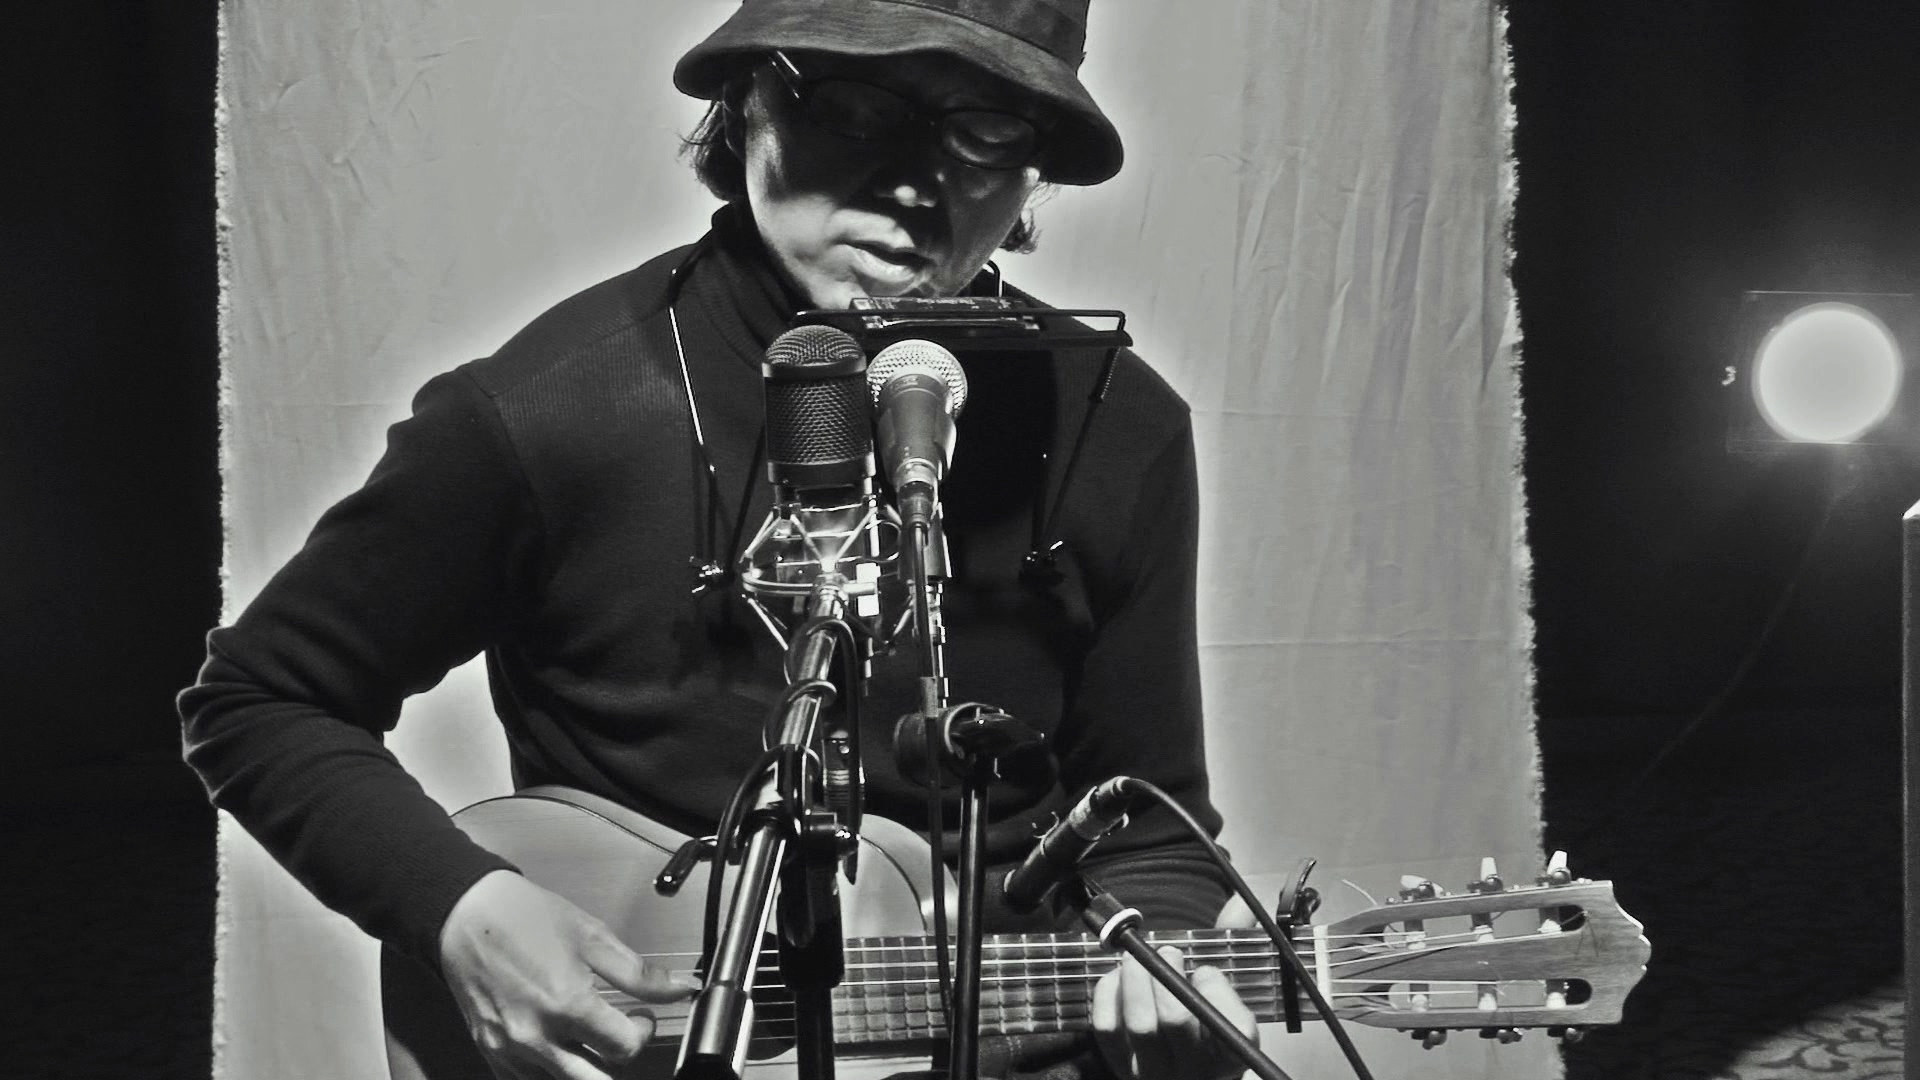 Kim DooSoo plays acoustic guitar.